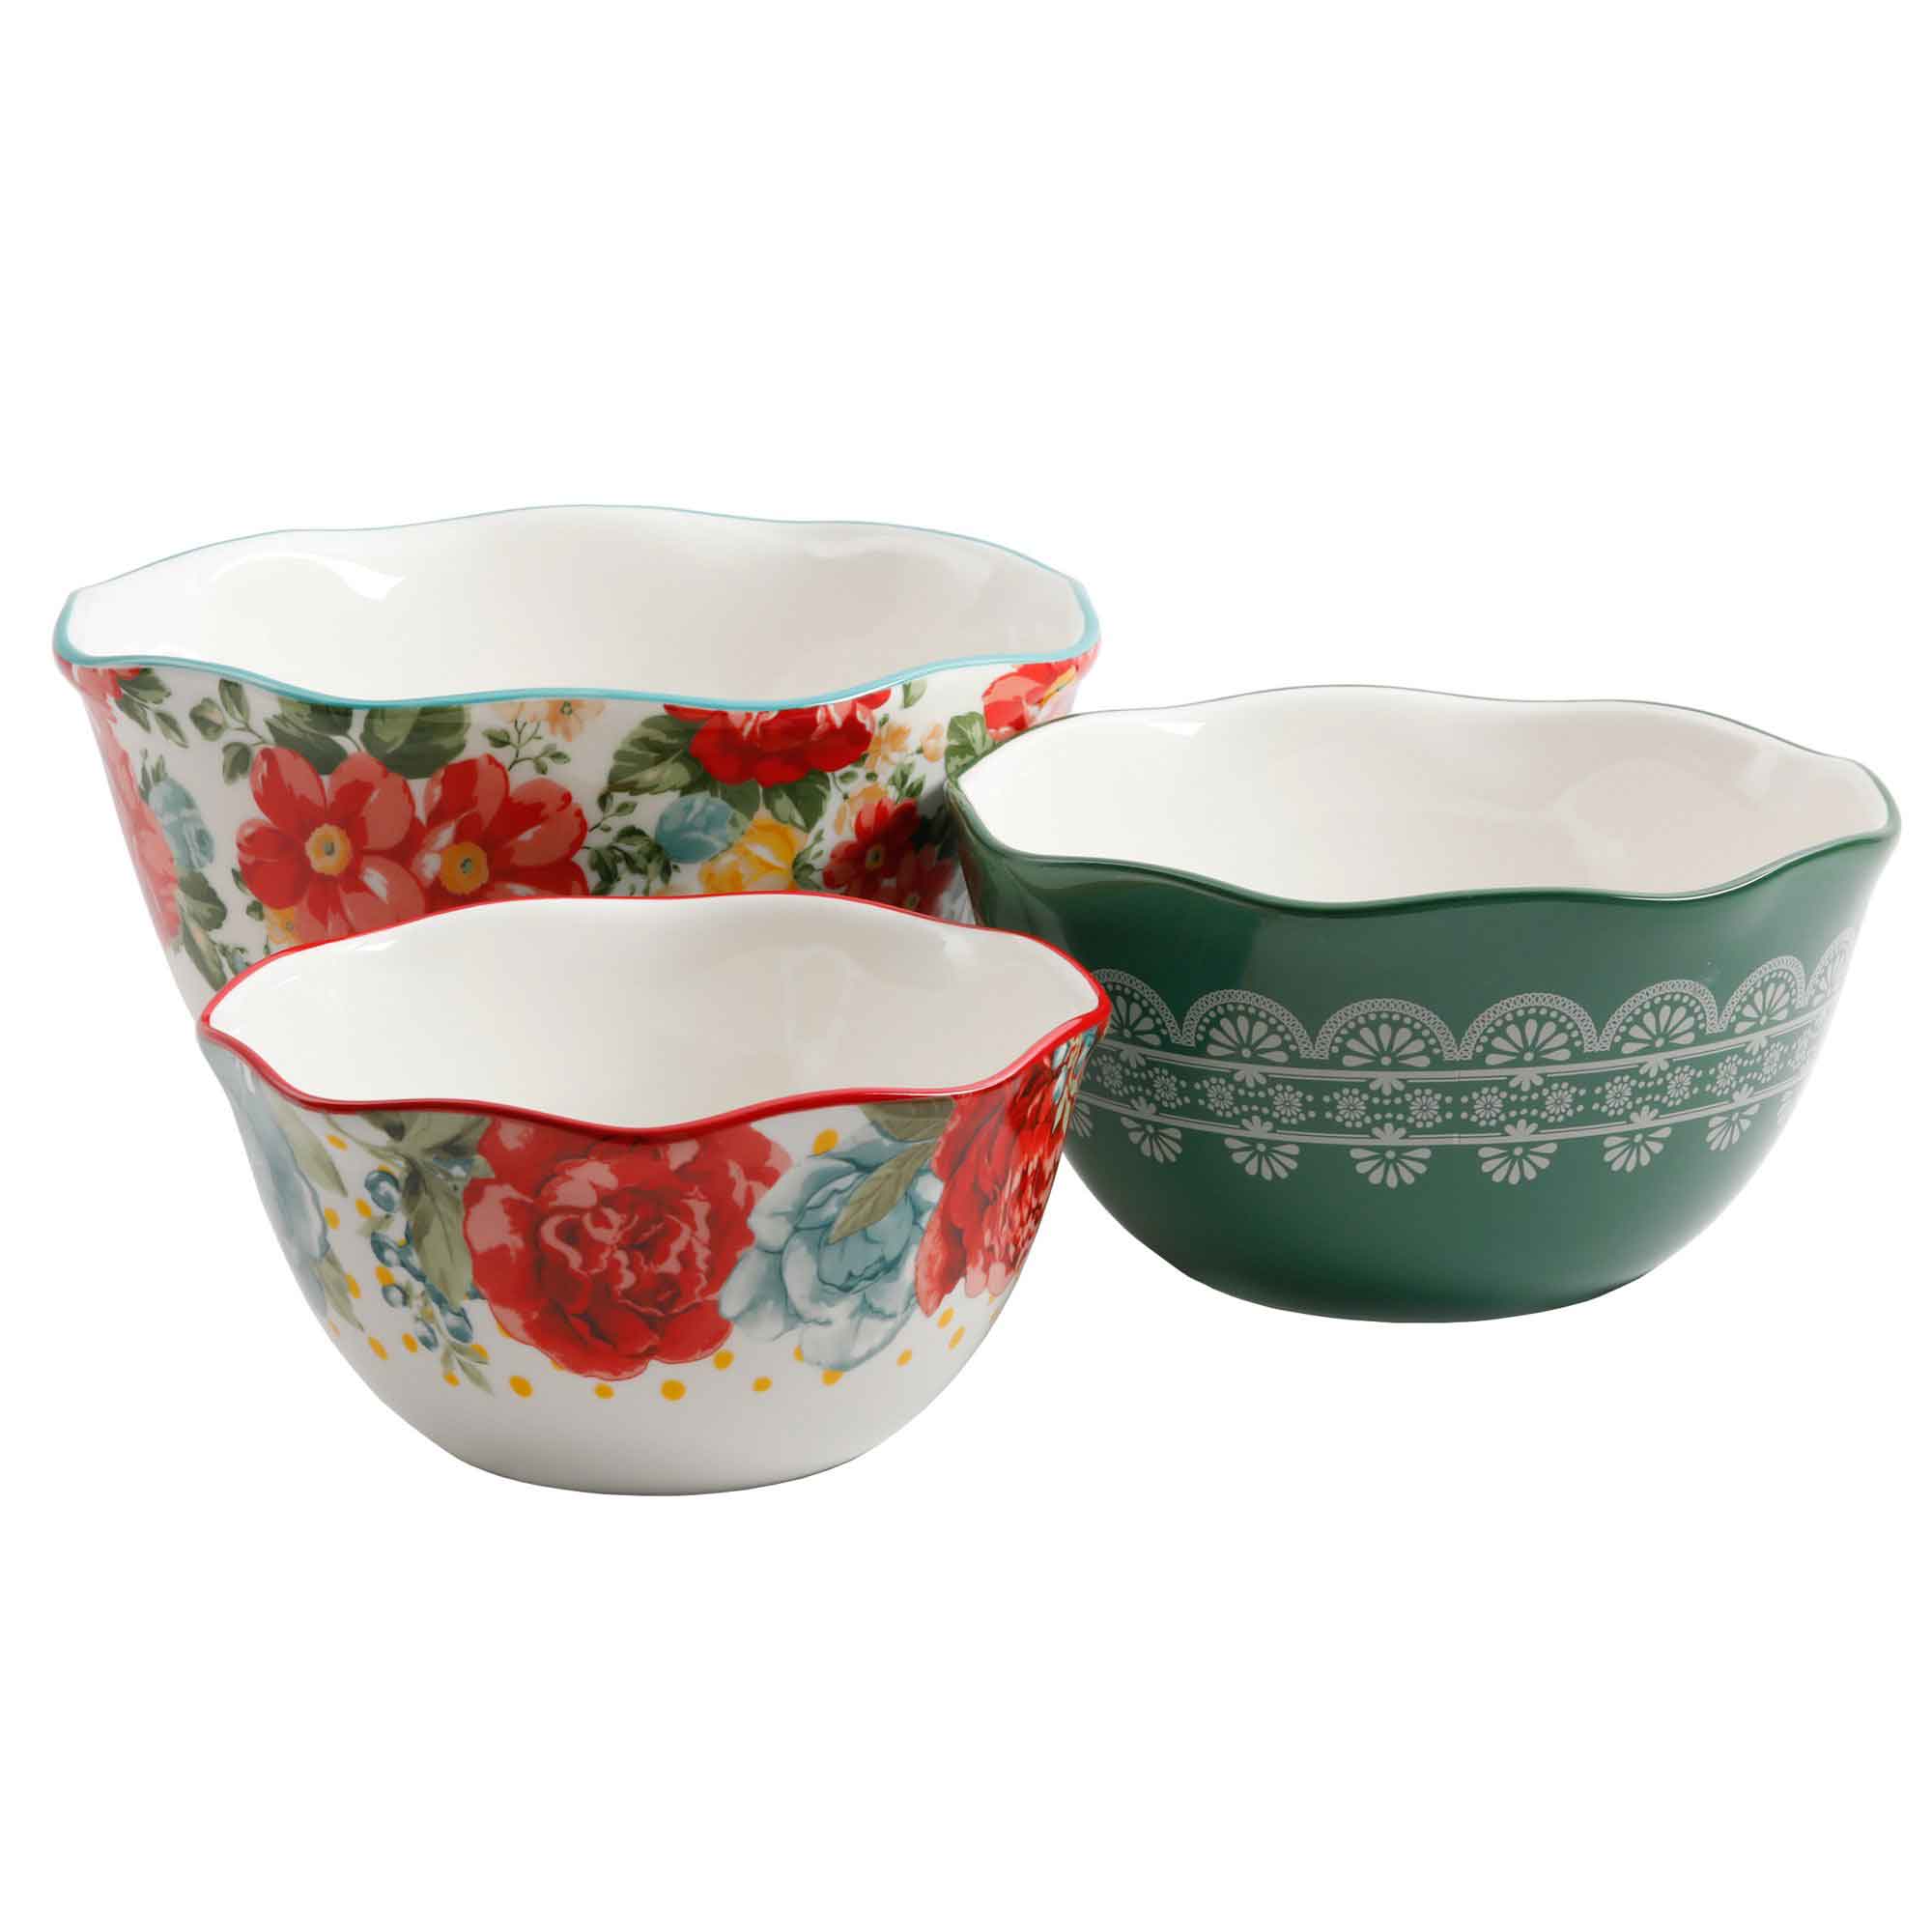 The Pioneer Woman Vintage Floral 5-Piece Pasta Bowl Set